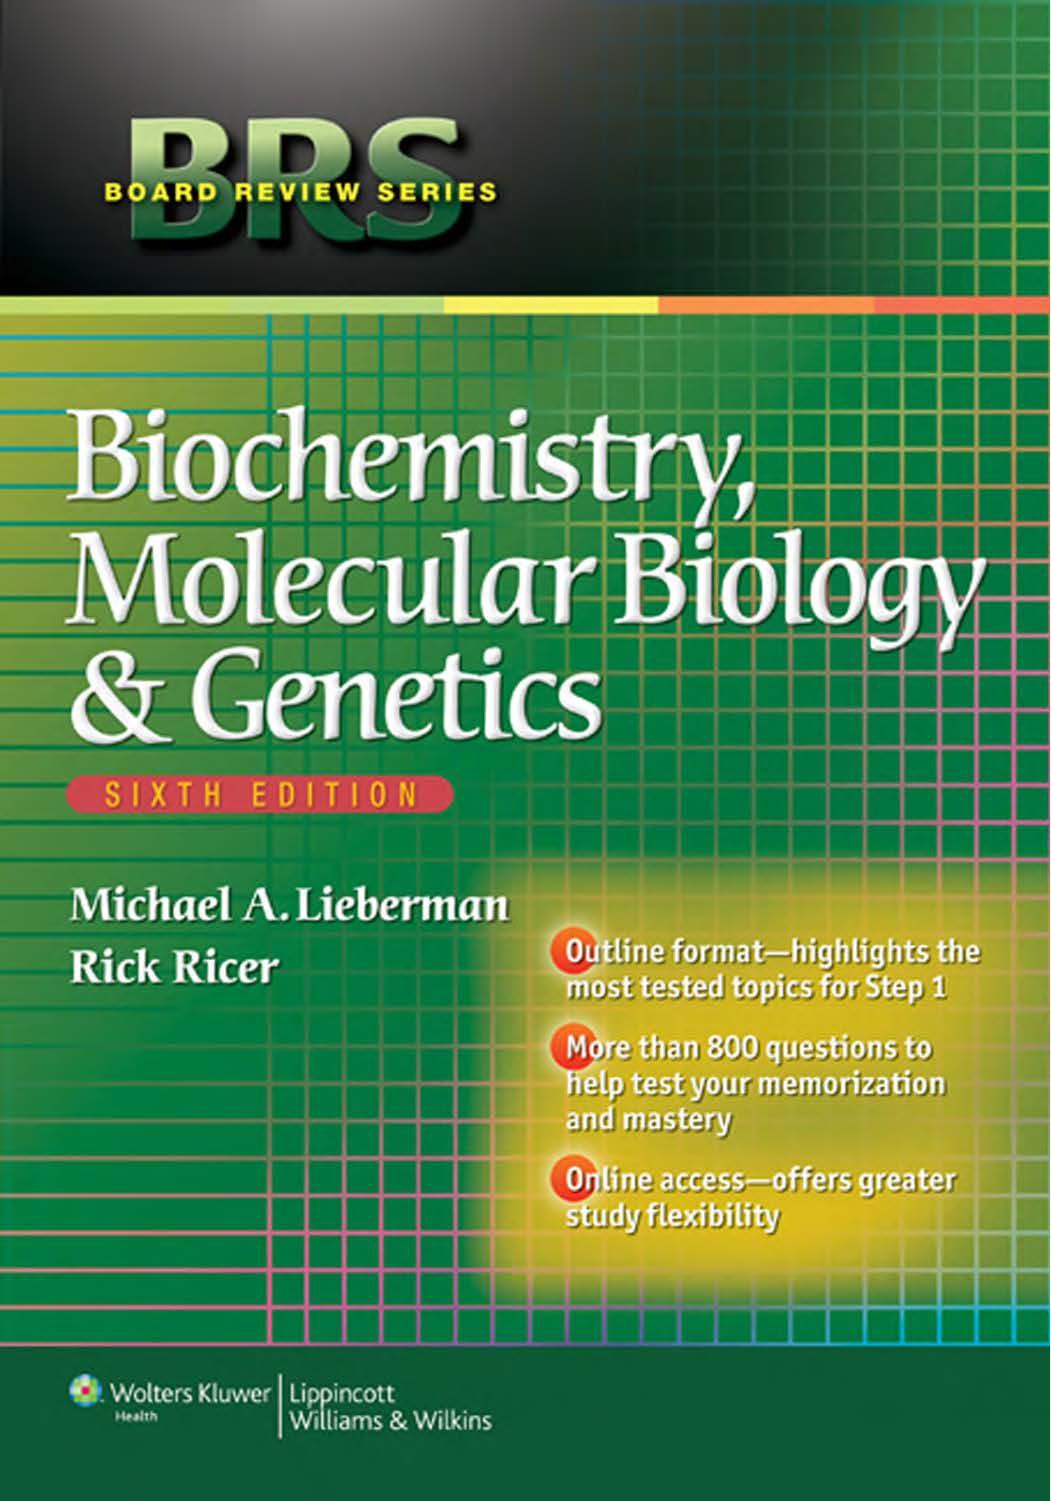 BOARD REIVEW SERIES: Biochemistry, Molecular Biology, and Genetics; SIXTH EDITION